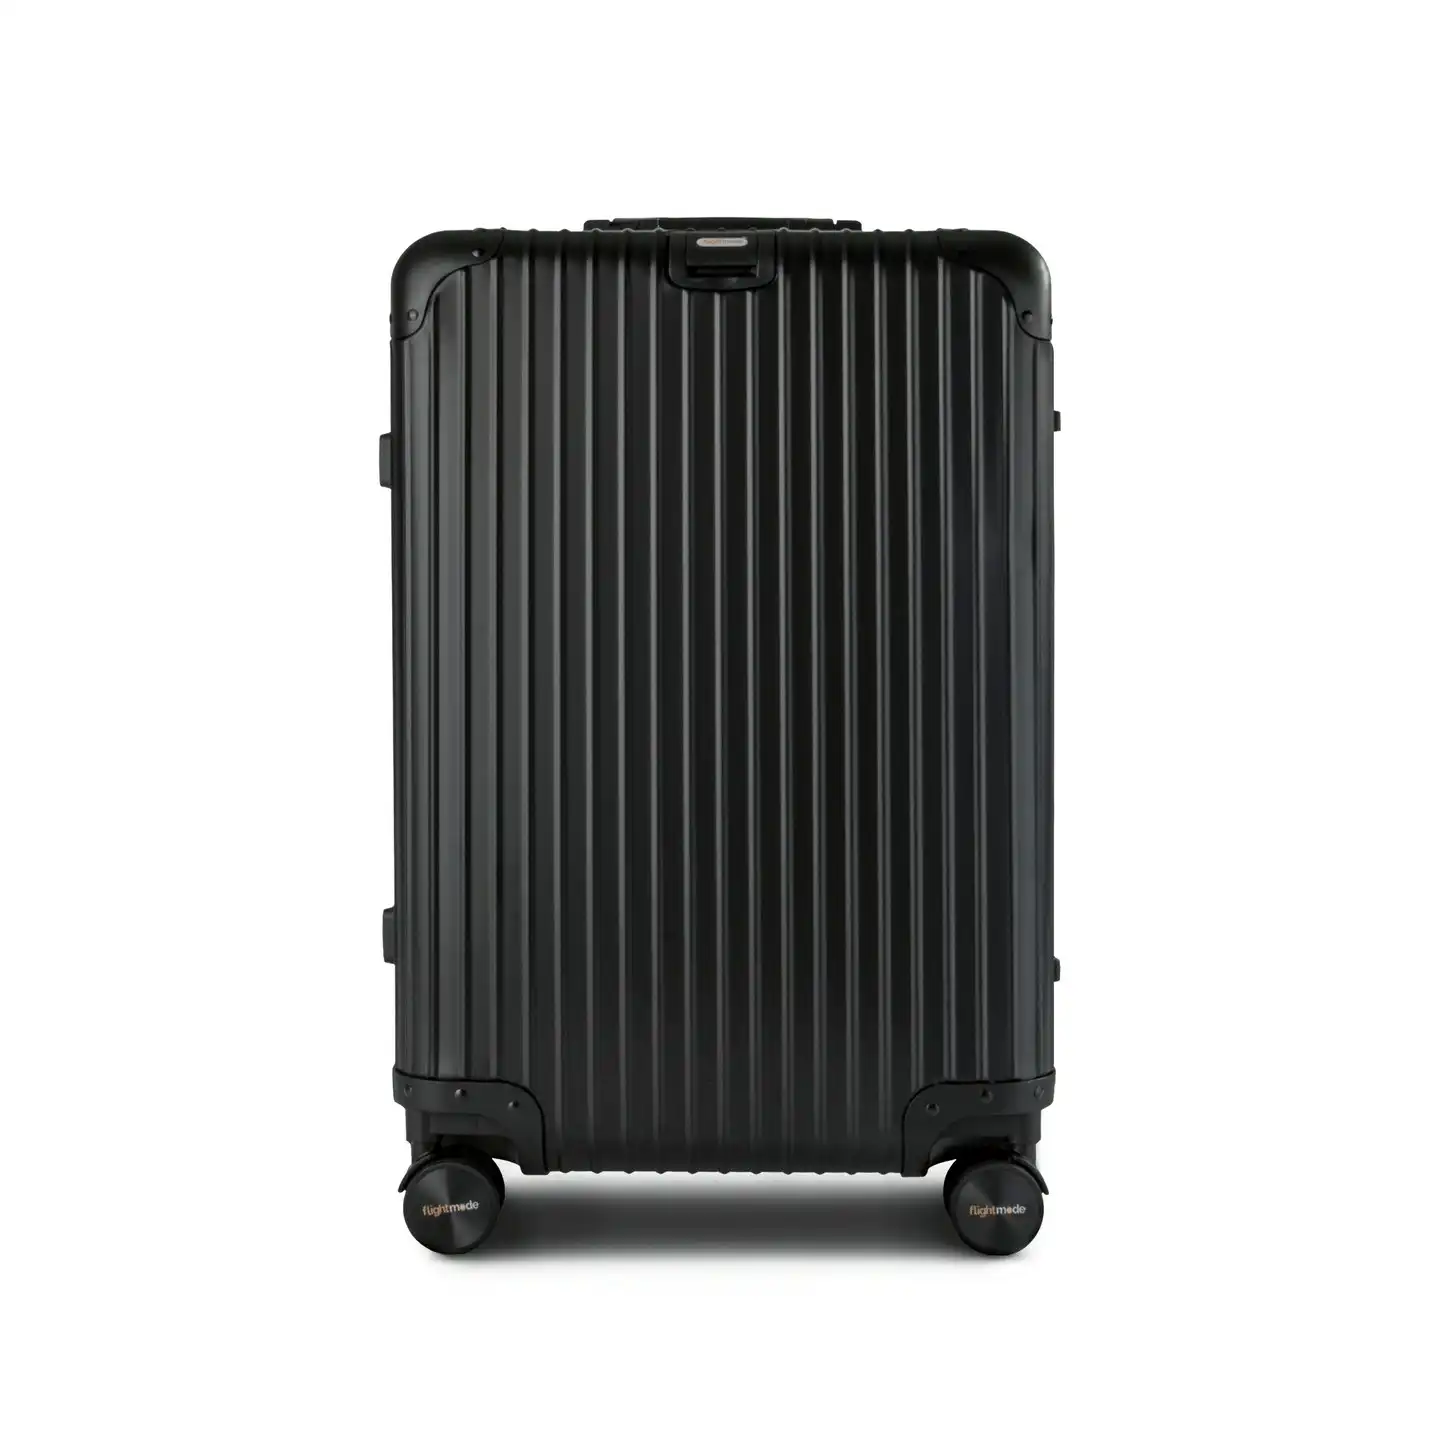 Flightmode Travel Suitcase Large-Black